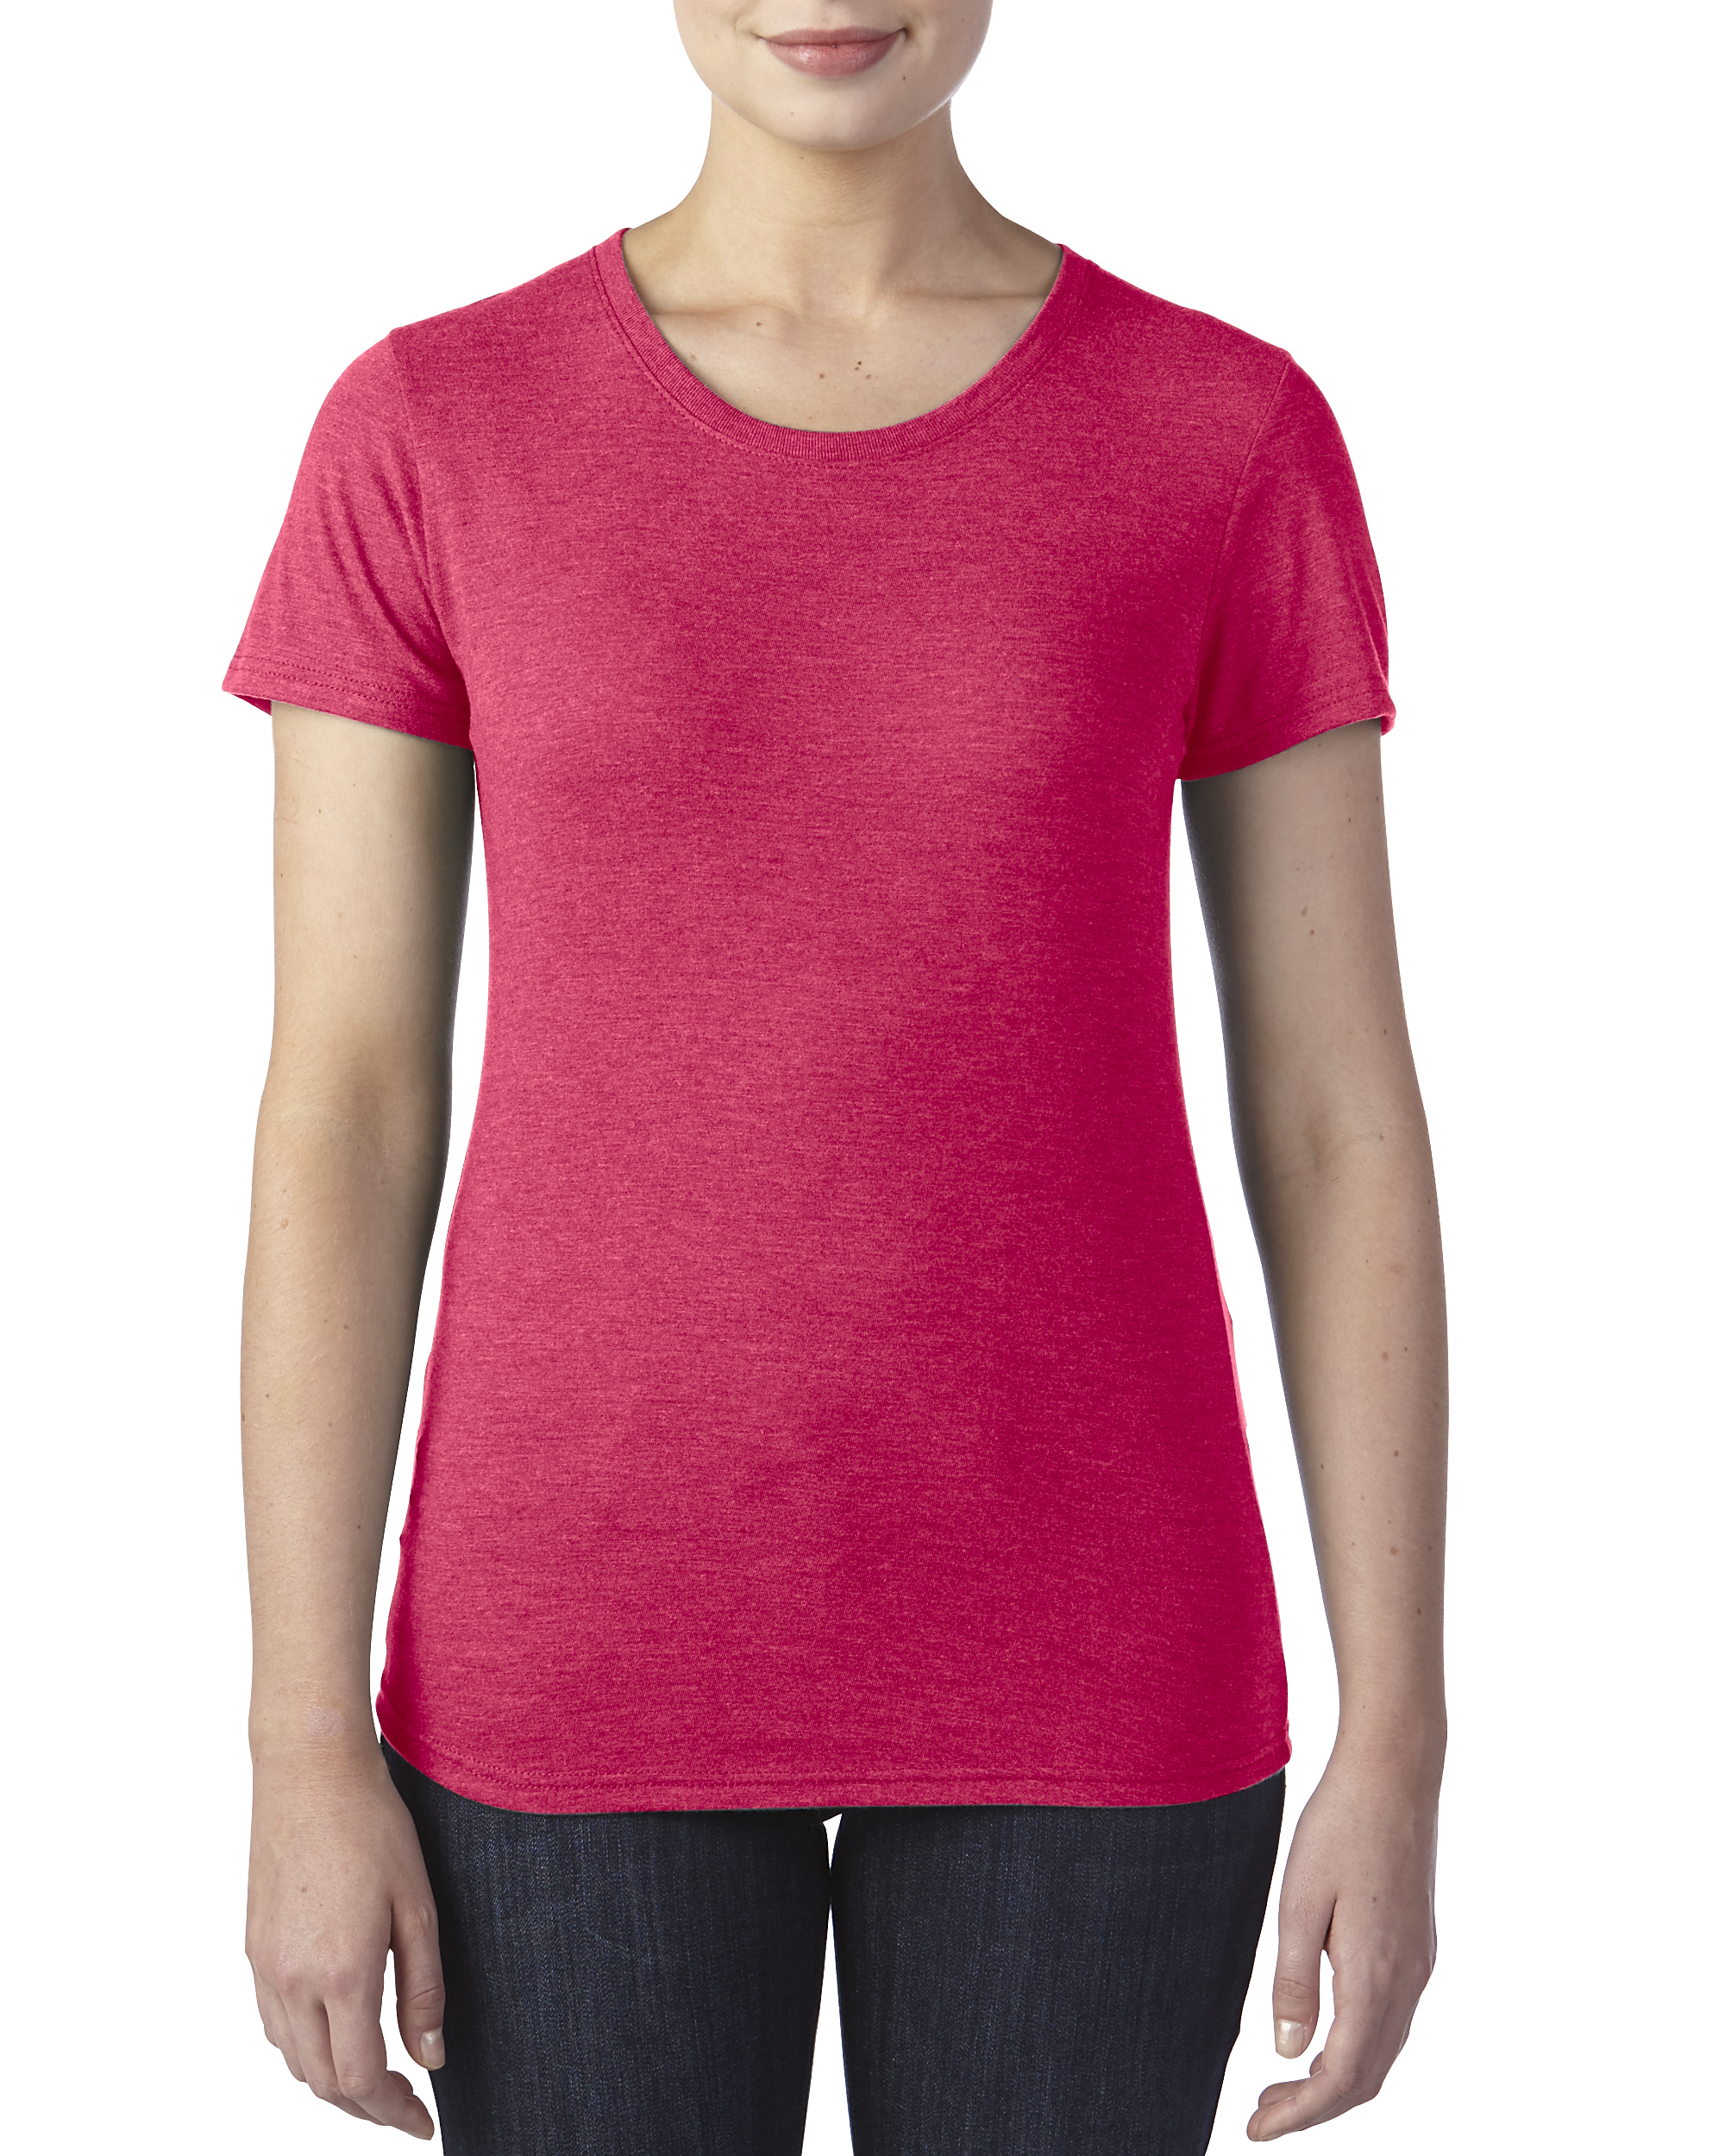 T-shirt Women’s Tri-Blend Tee ANVIL